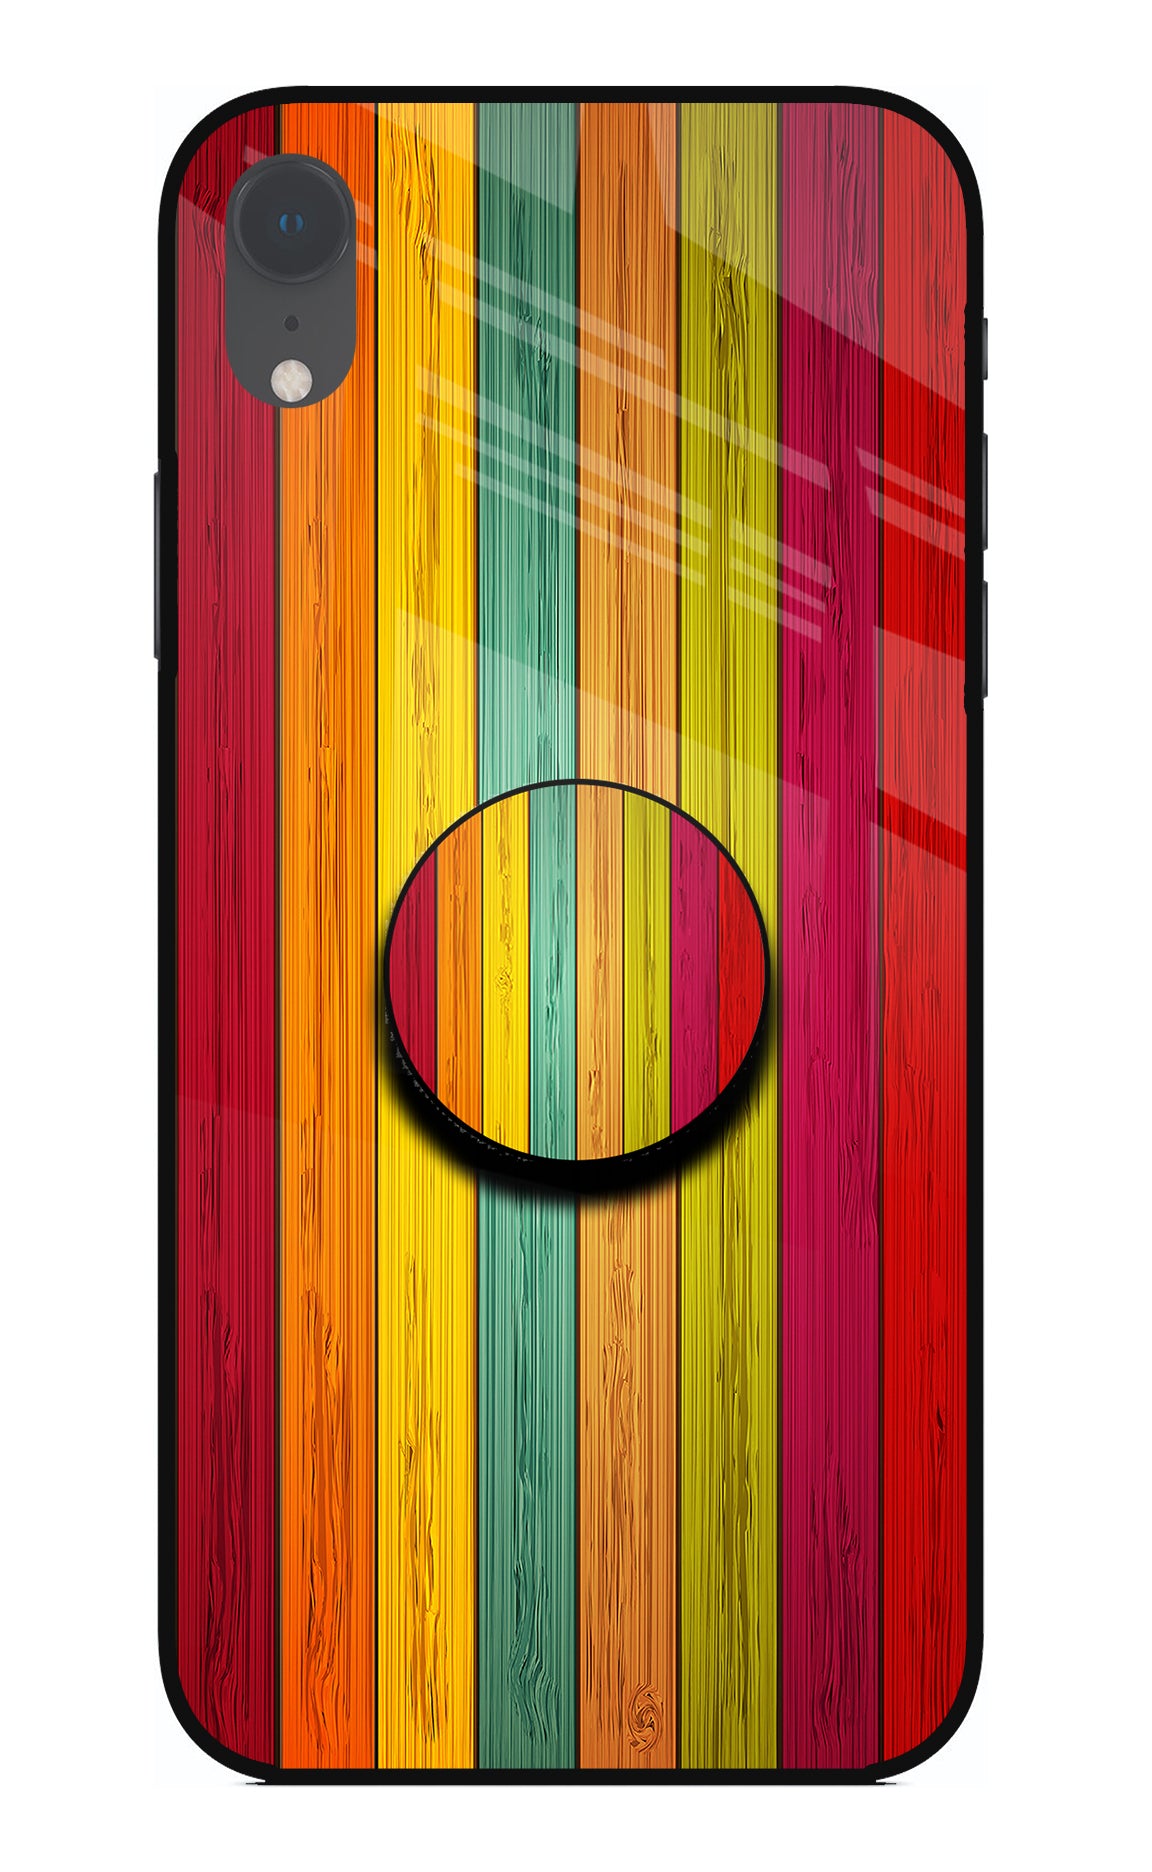 Multicolor Wooden iPhone XR Pop Case